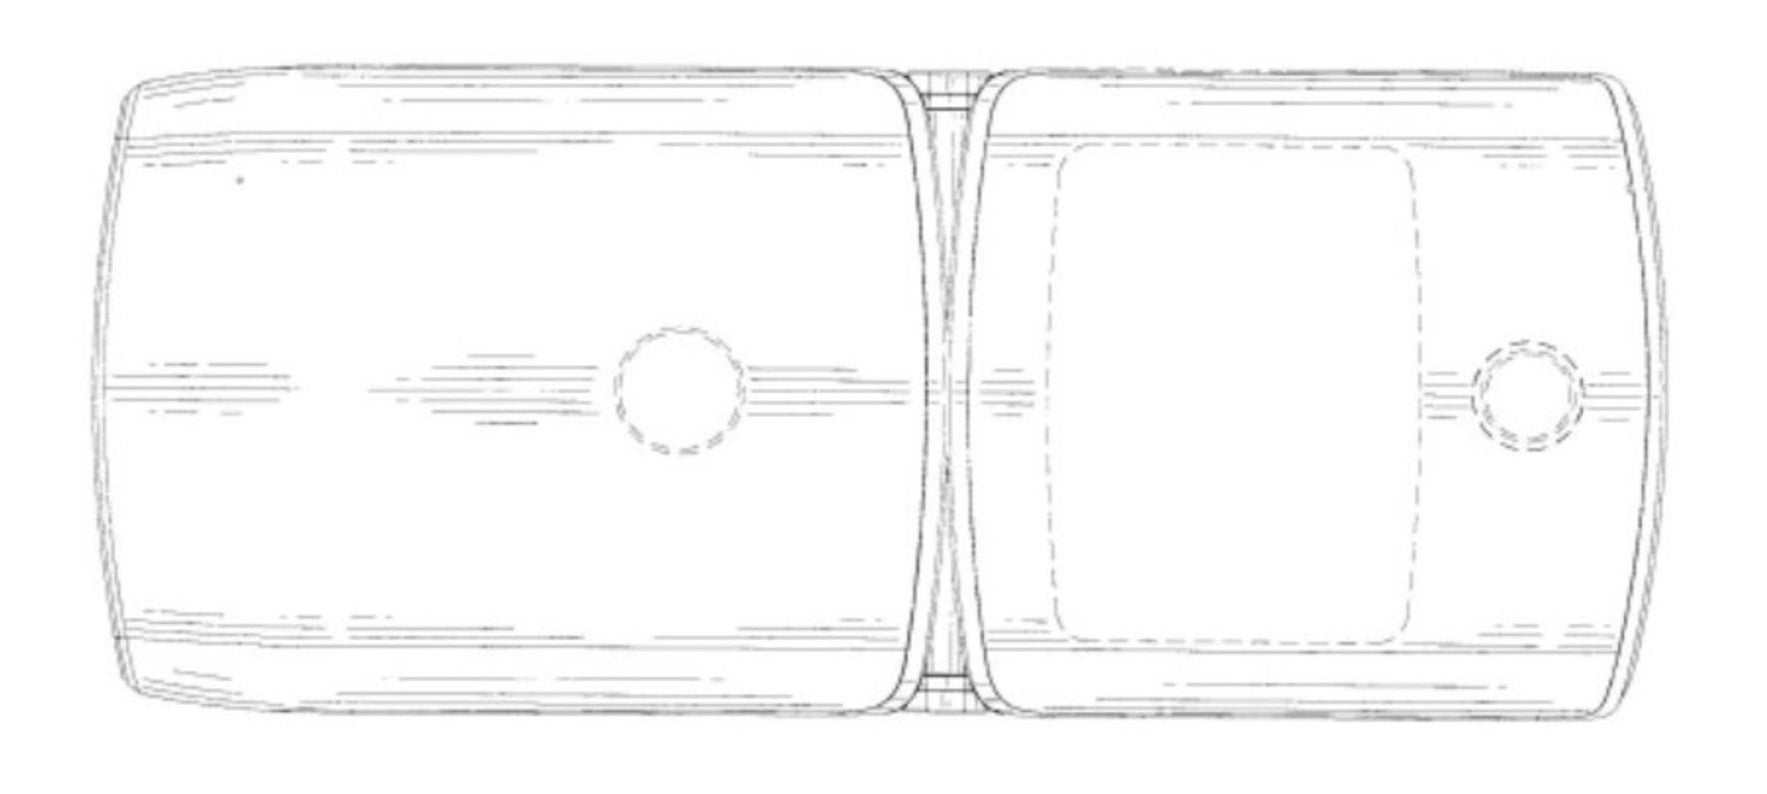 This Motorola patent drawing could be a look at the new Motorola Razr - Samsung Galaxy Fold vs the foldable Motorola Razr: how are they different?